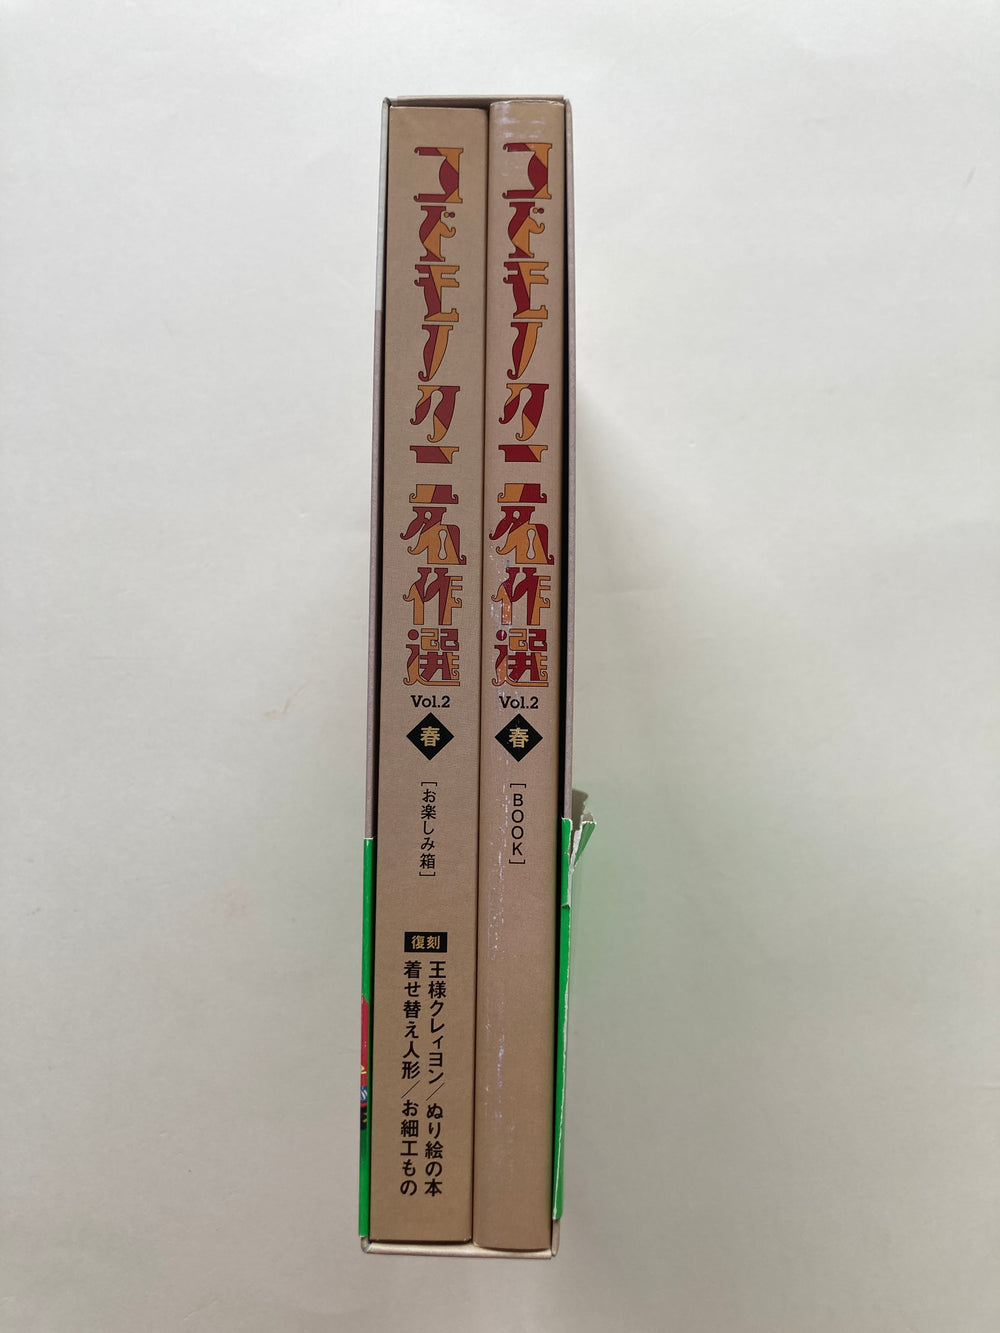 Masterpiece Selection of Kodomo no Kuni (Children's Country). Vol. 2